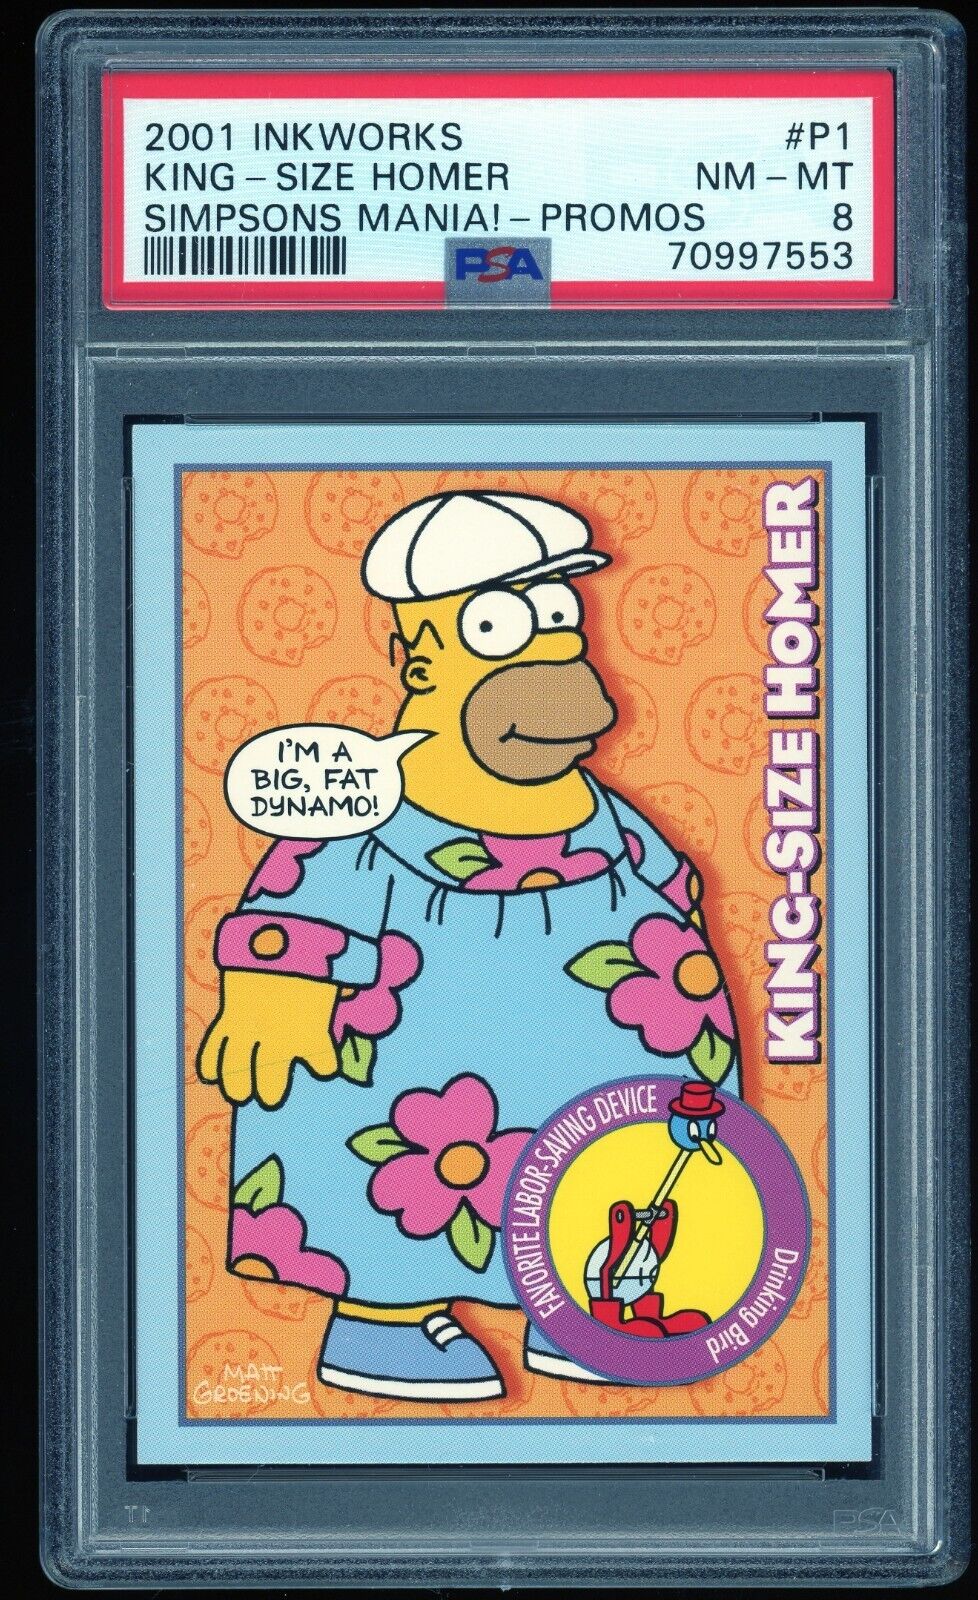 Homer Simpson 2001 Inkworks Simpsons Mania Promos #P1 King Size Homer PSA 8